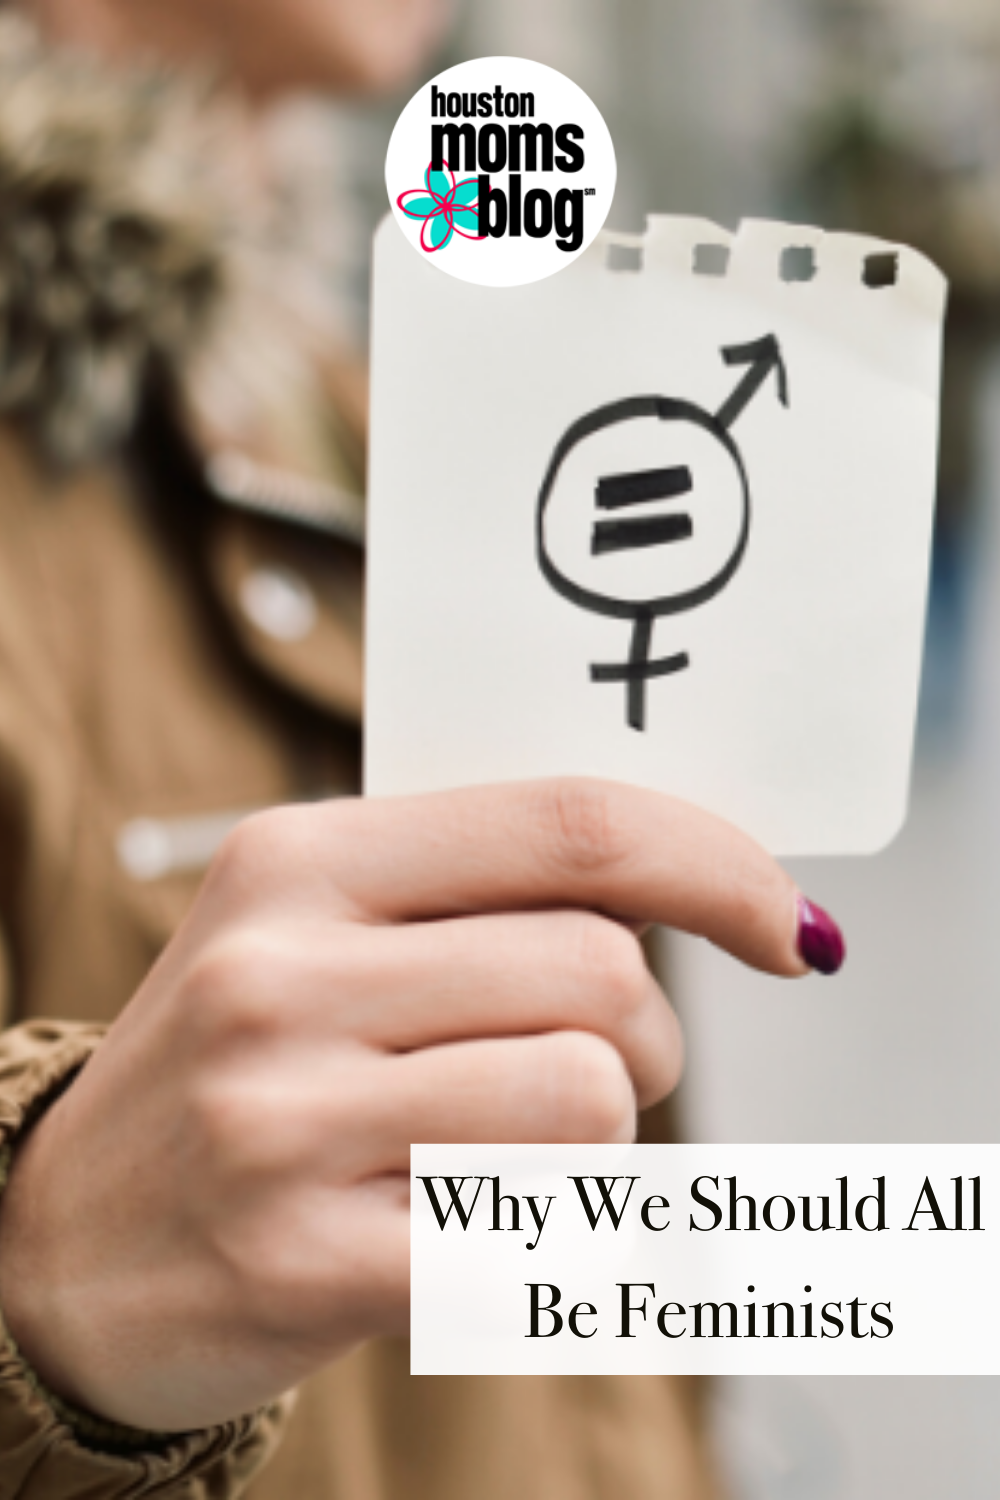 Houston Moms Blog "Why We Should All Be Feminists" #houstonmomsblog #momsaroundhouston